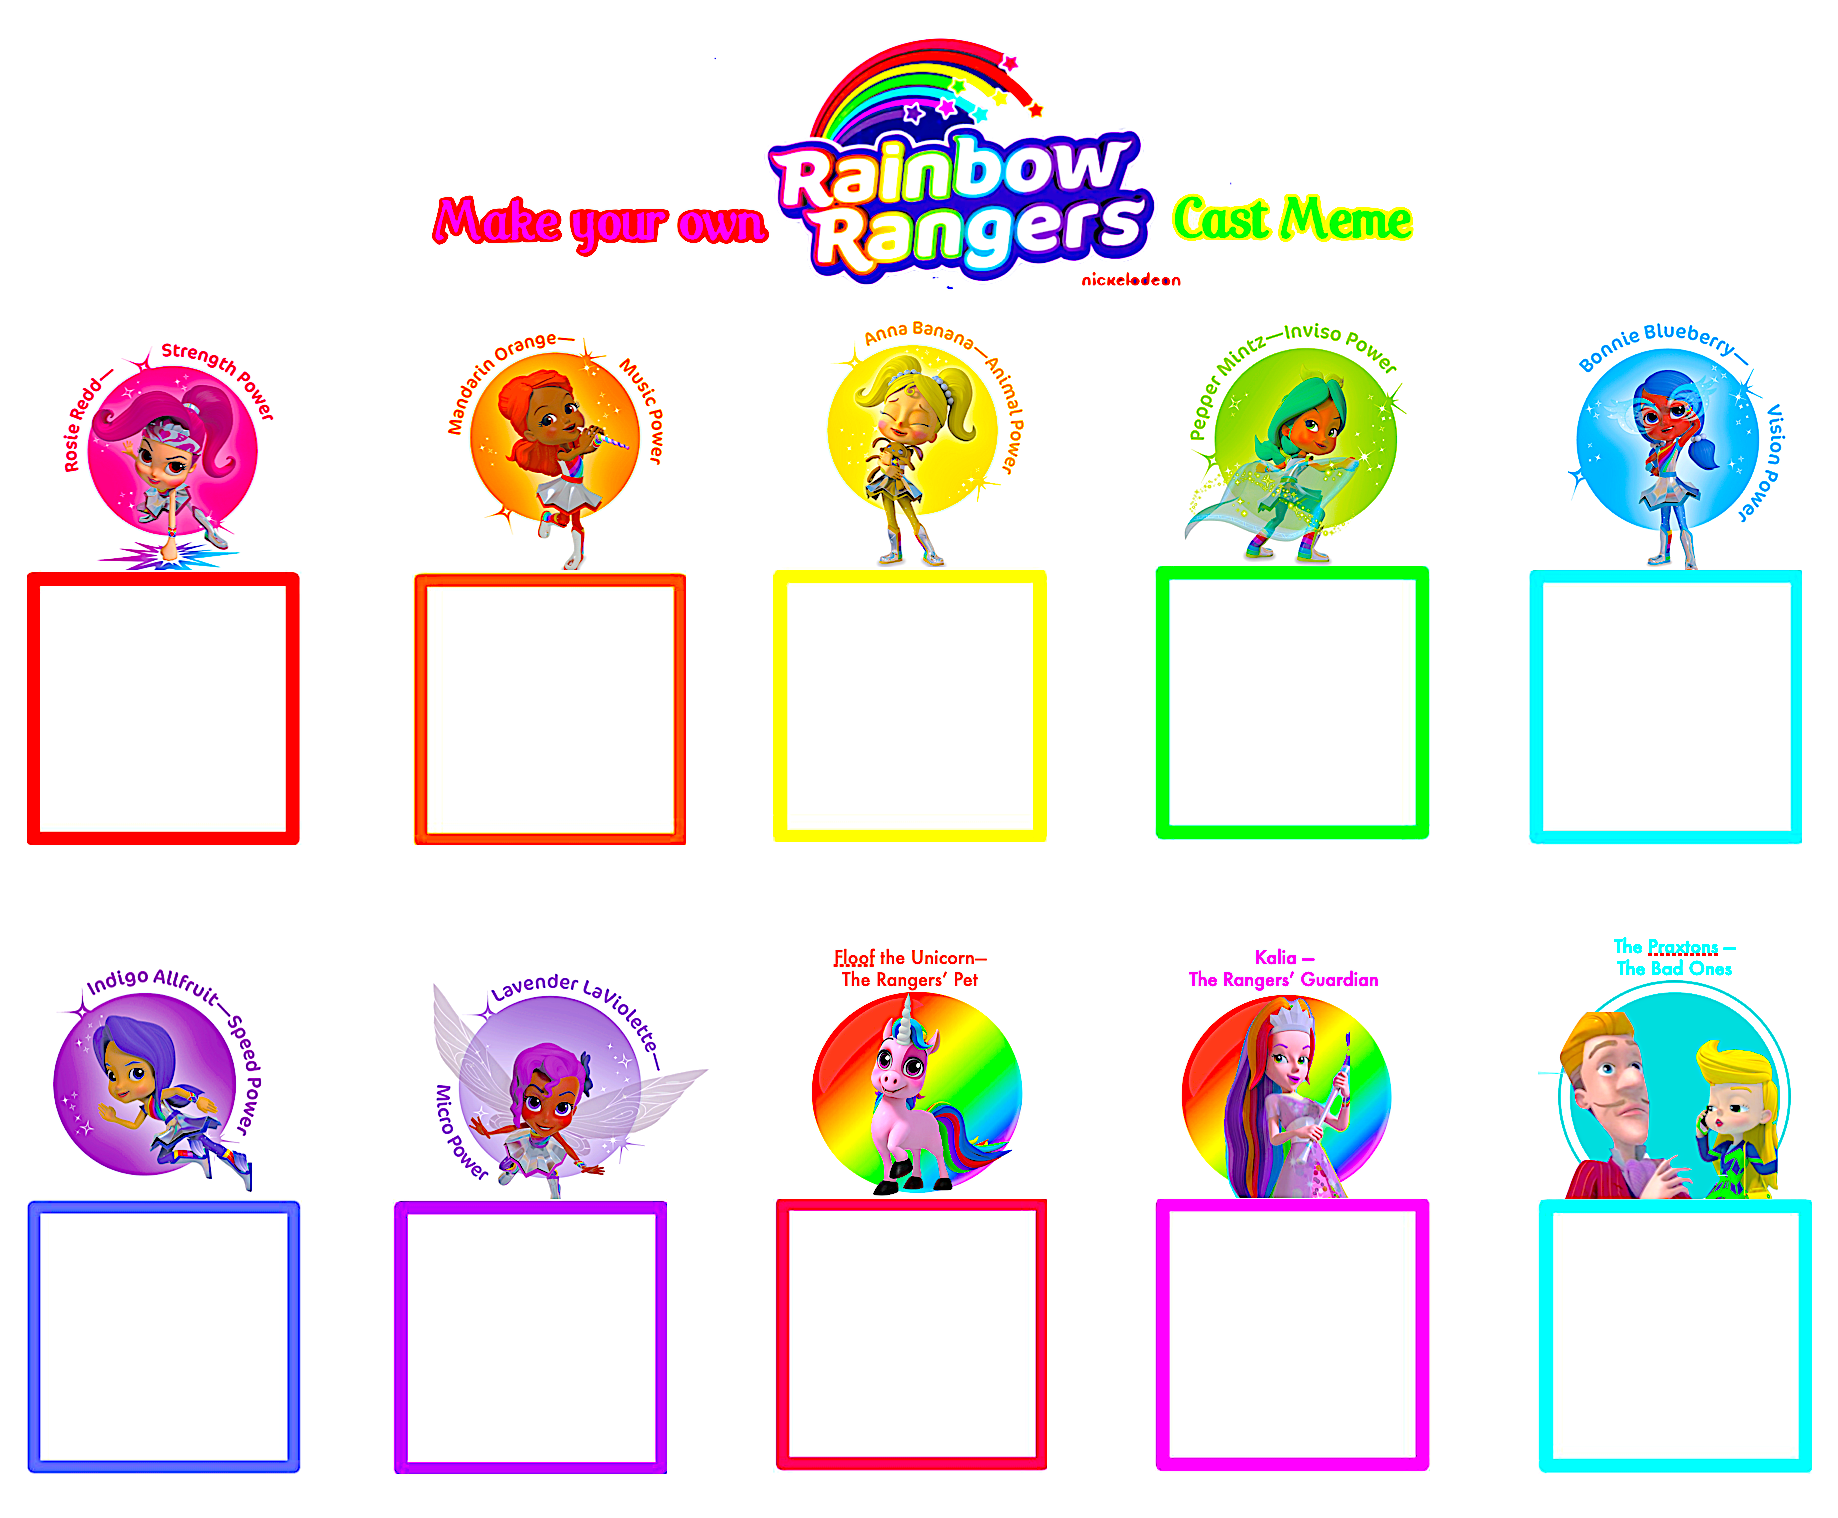 Floof  Rainbow Rangers